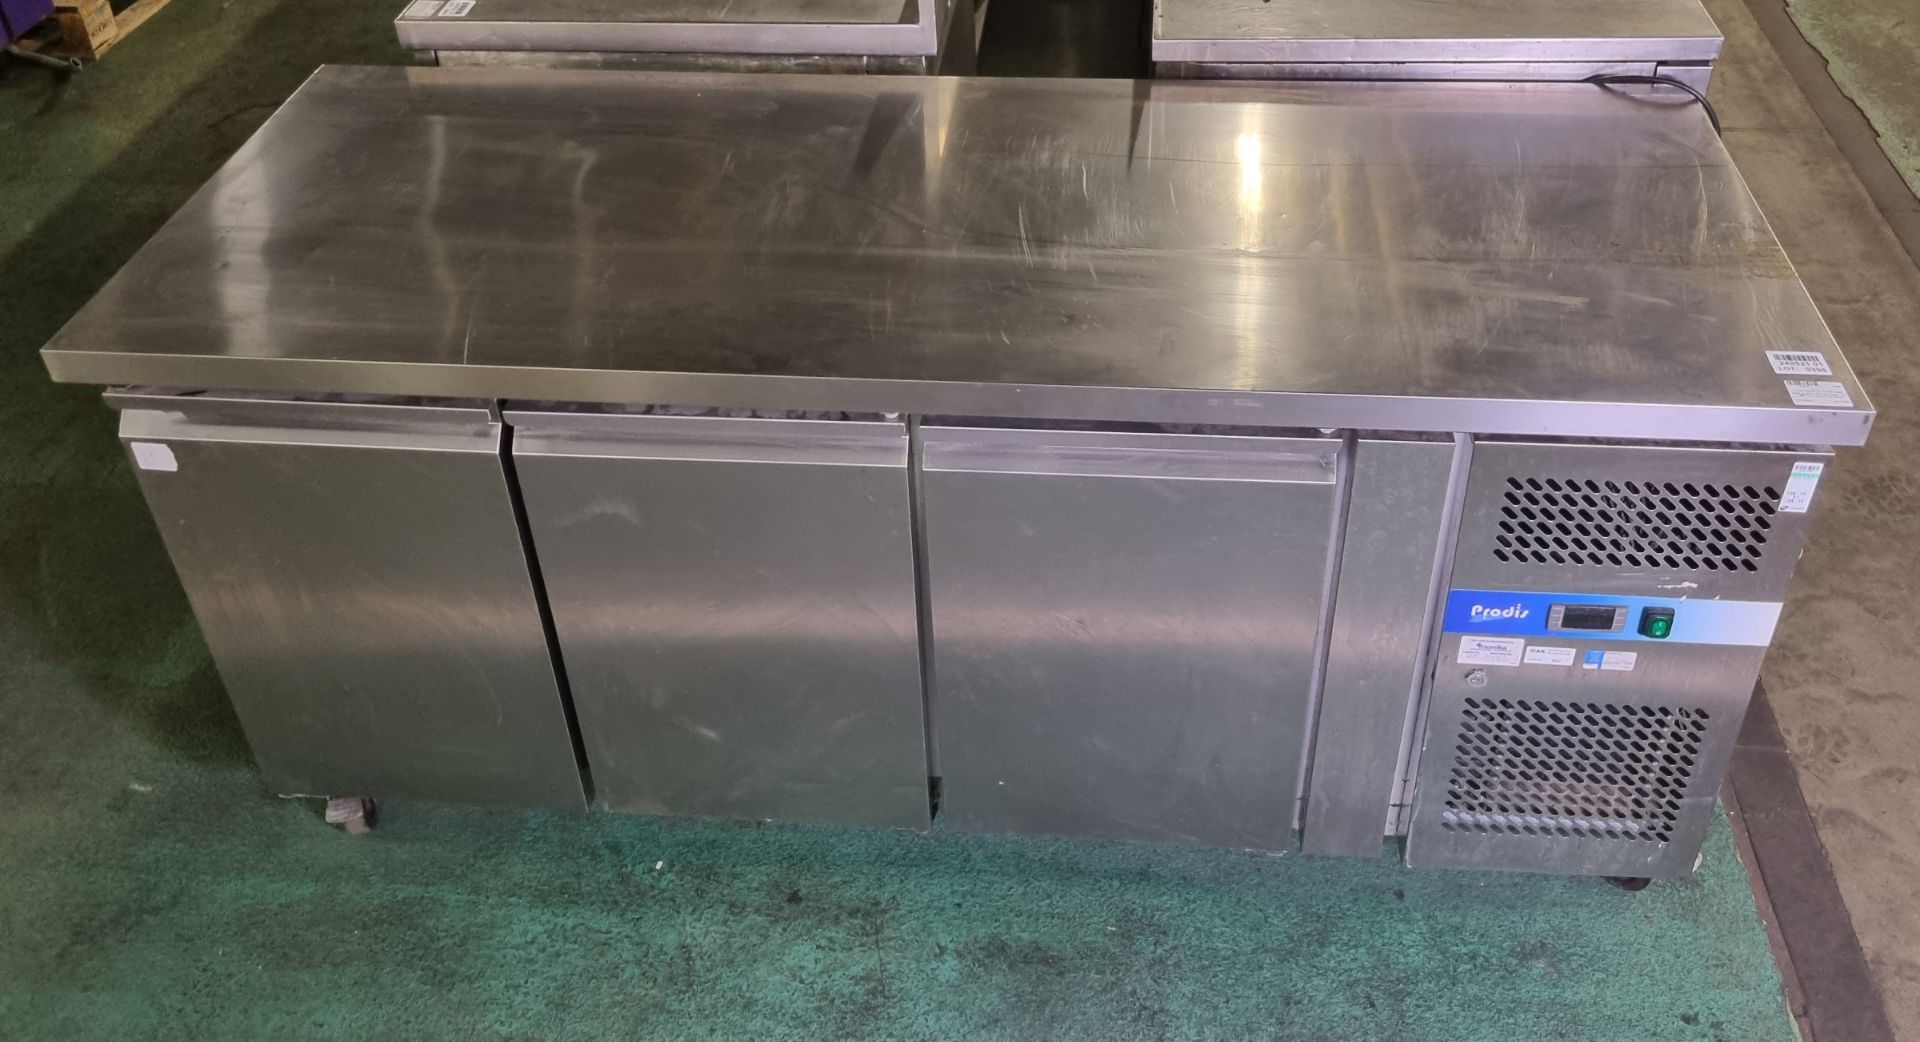 Prodis GN3100TN stainless steel 3 door counter fridge - W 1800 x D 700 x H 830mm - Image 2 of 6